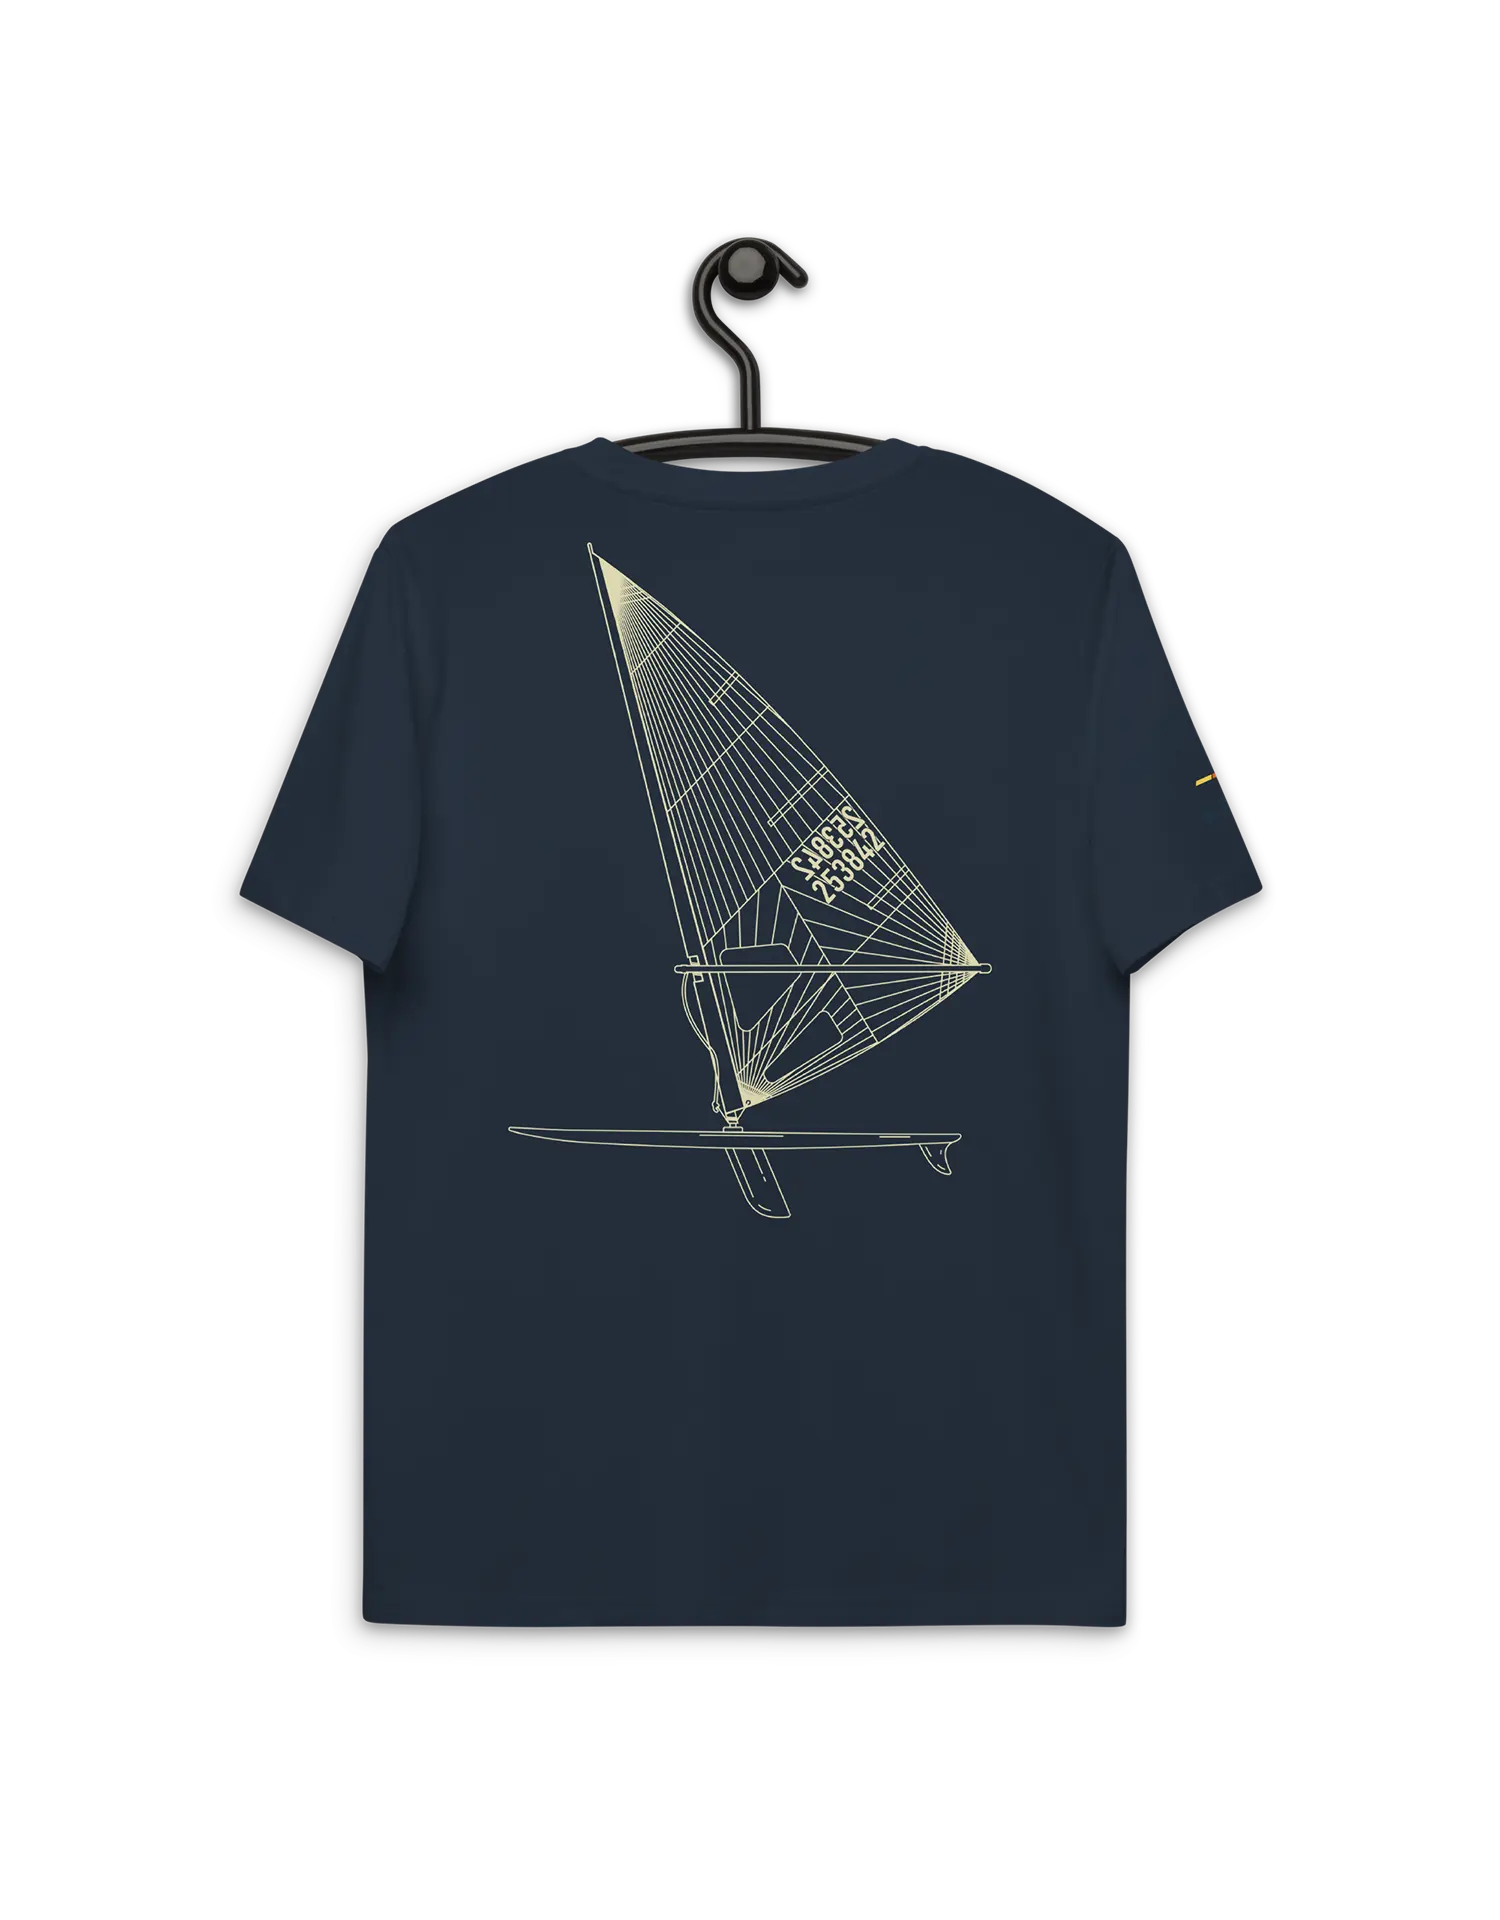 Windsurfer Blueprint French Navy Premium Organic Cotton Eco-friendly T-Shirt by KOAV